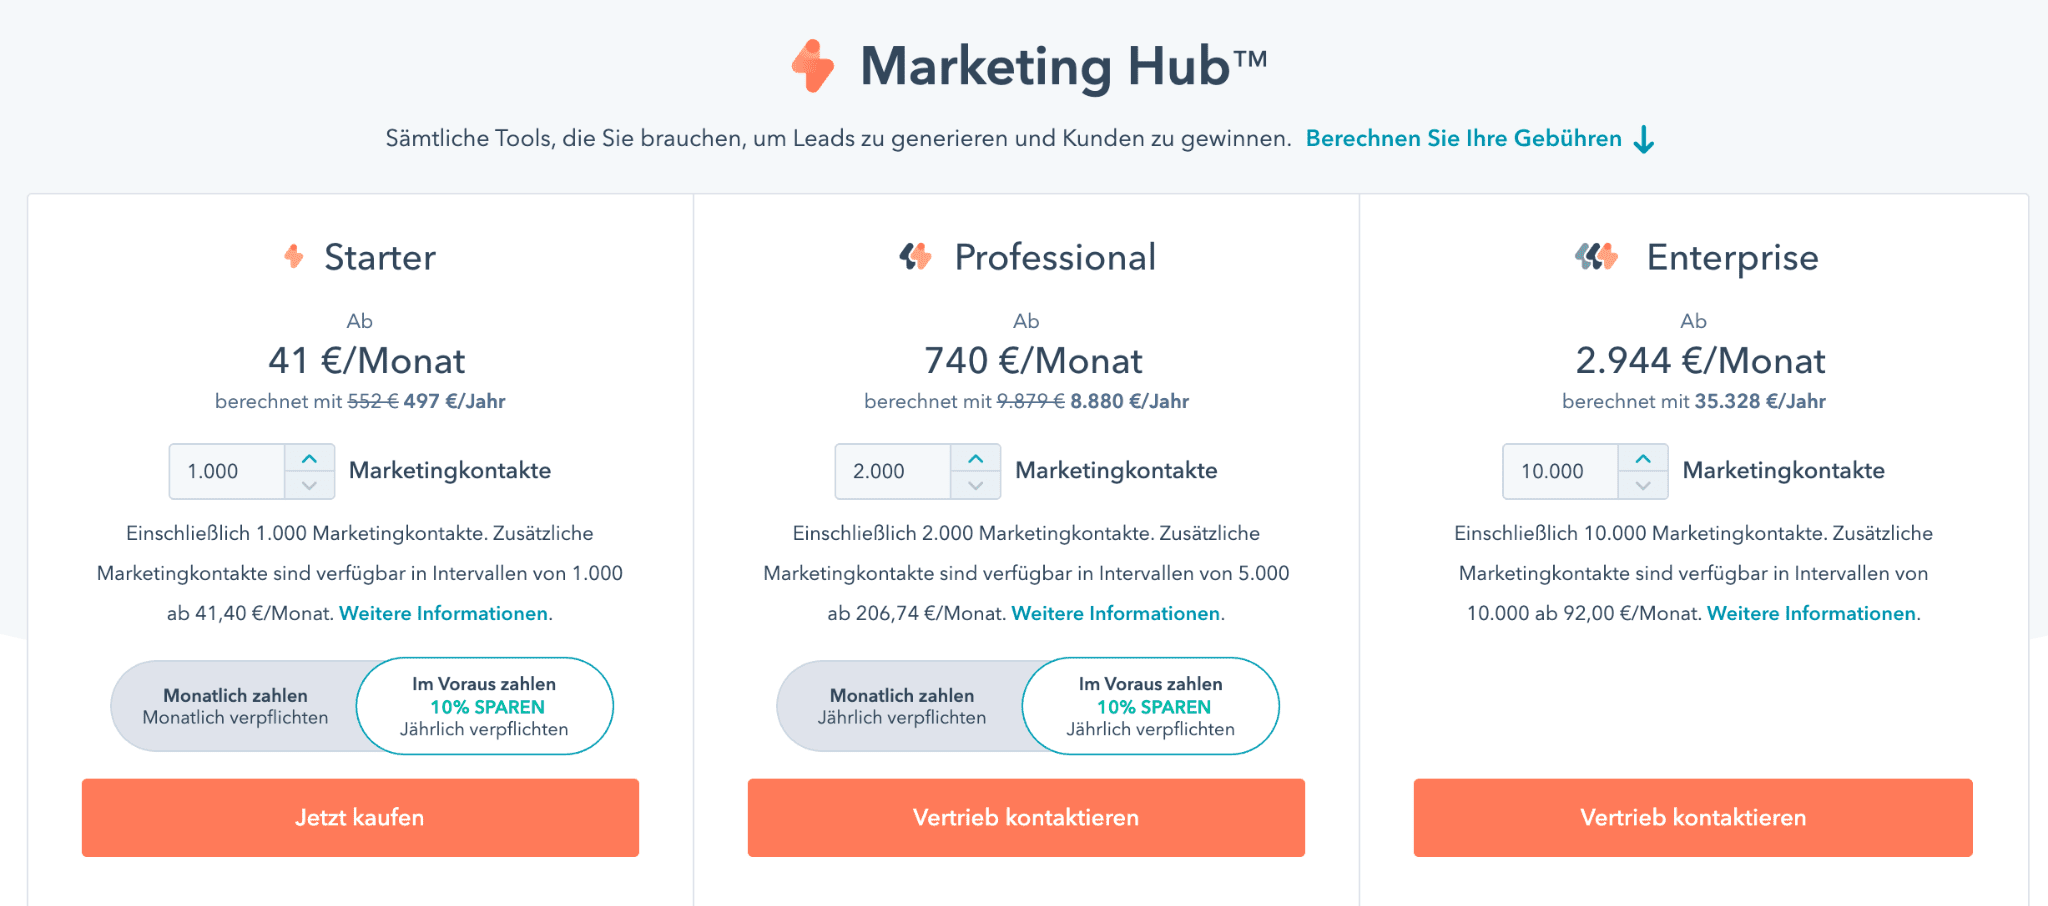 hubspot marketing hub